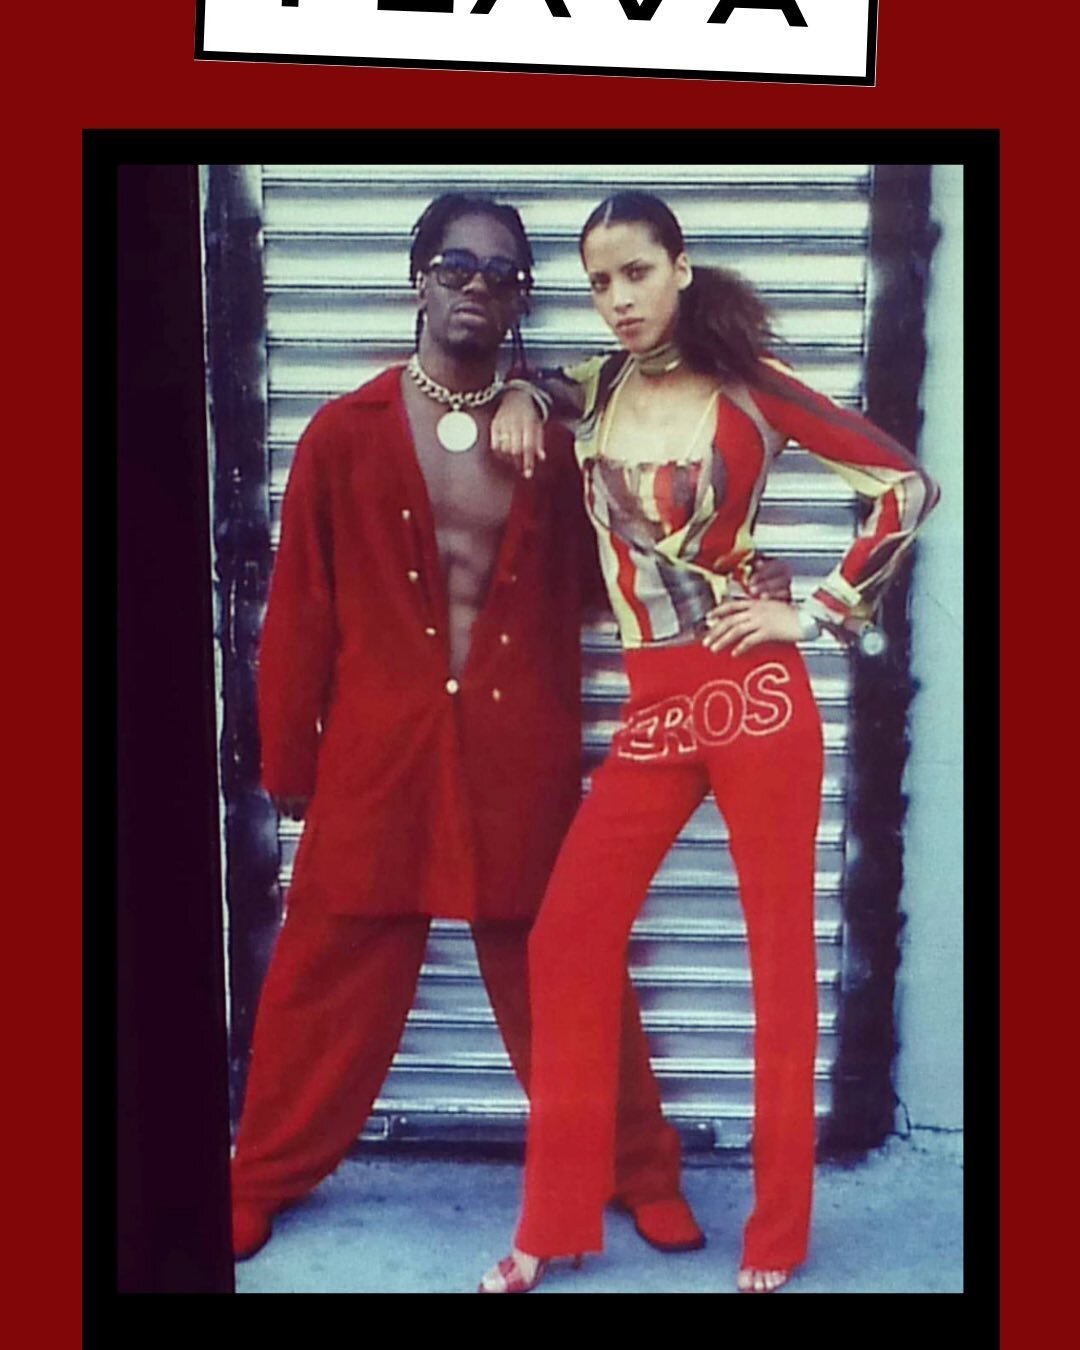 &ldquo;Drama &amp; Flava&rdquo; featuring LaRonz Murray and Noemie Lenoir captured by the legendary, Jamel Shabazz. #fashion #newyork #art #jamelshabazz #posingbeauty #history #legend